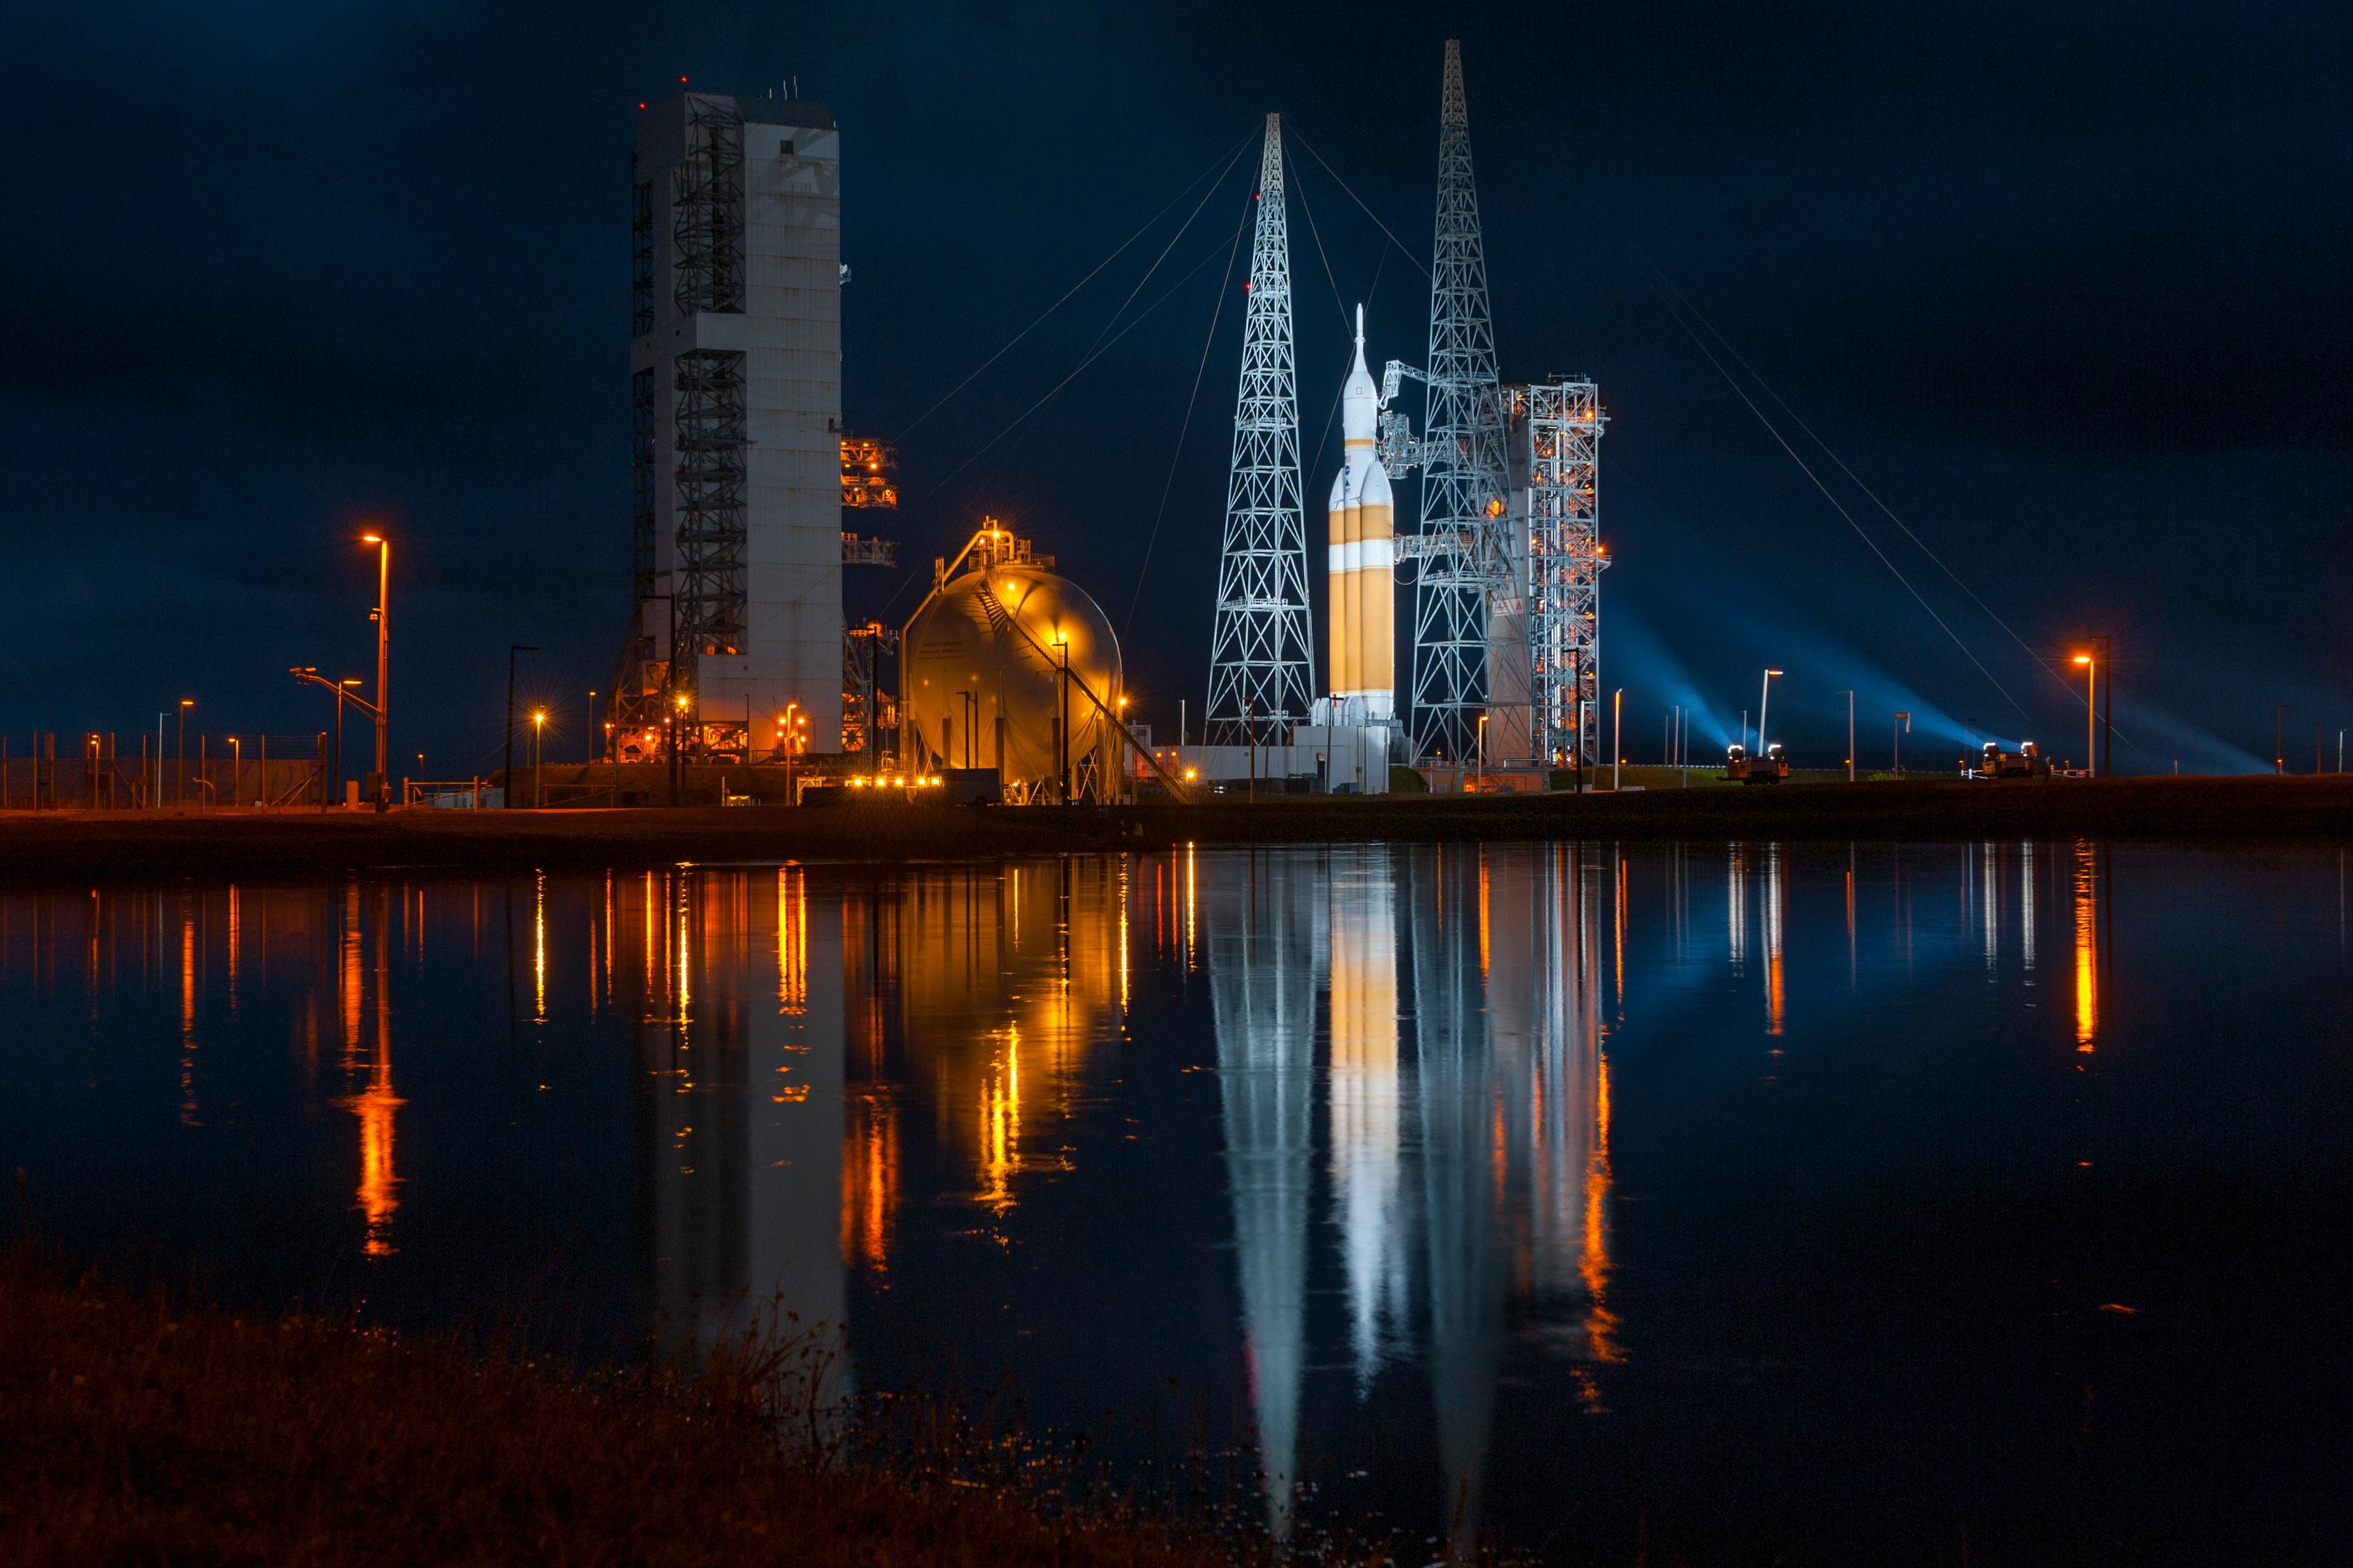 Rocket Launch Space Lake Water Reflection NASA 3845x2563